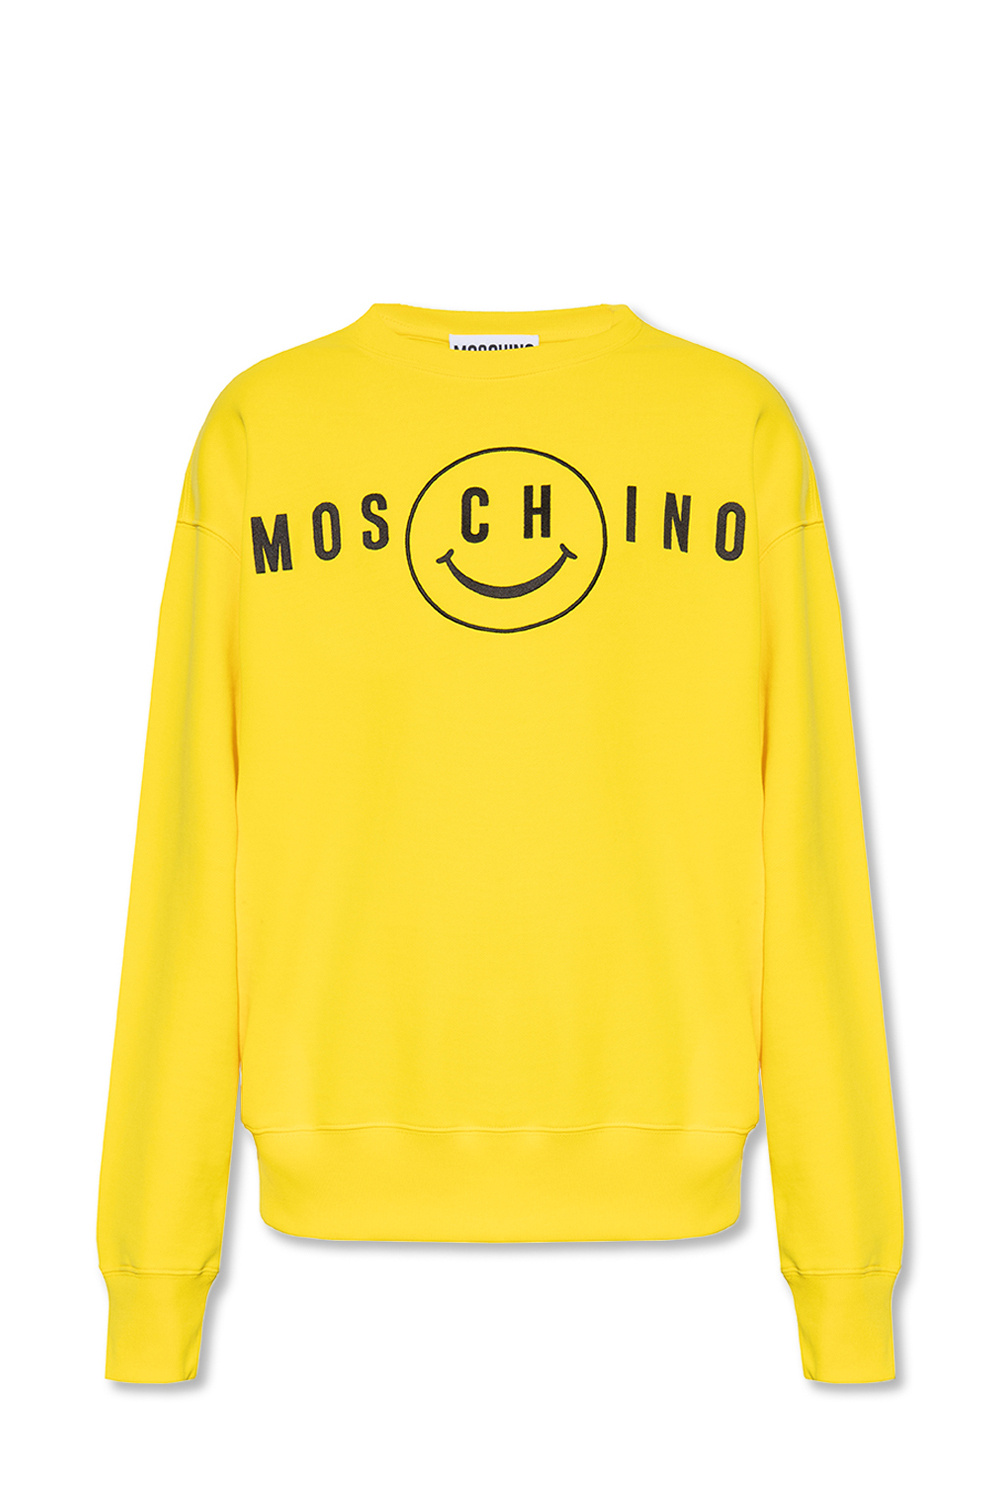 Moschino osklen long sleeves t shirt item